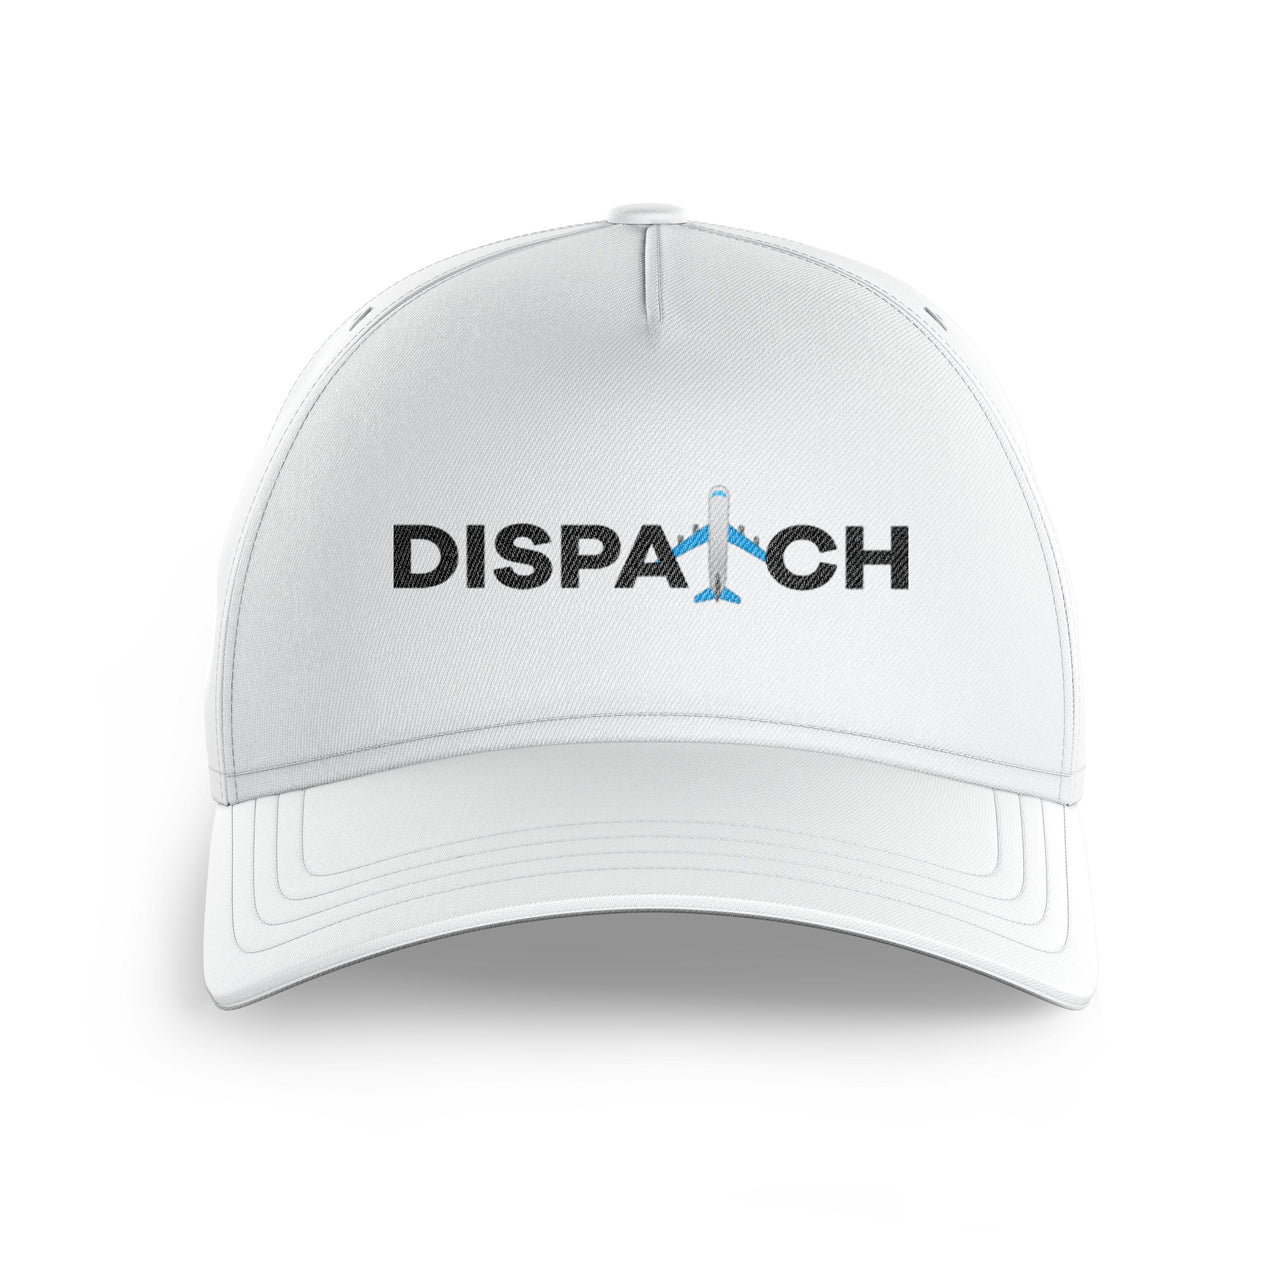 Dispatch Printed Hats